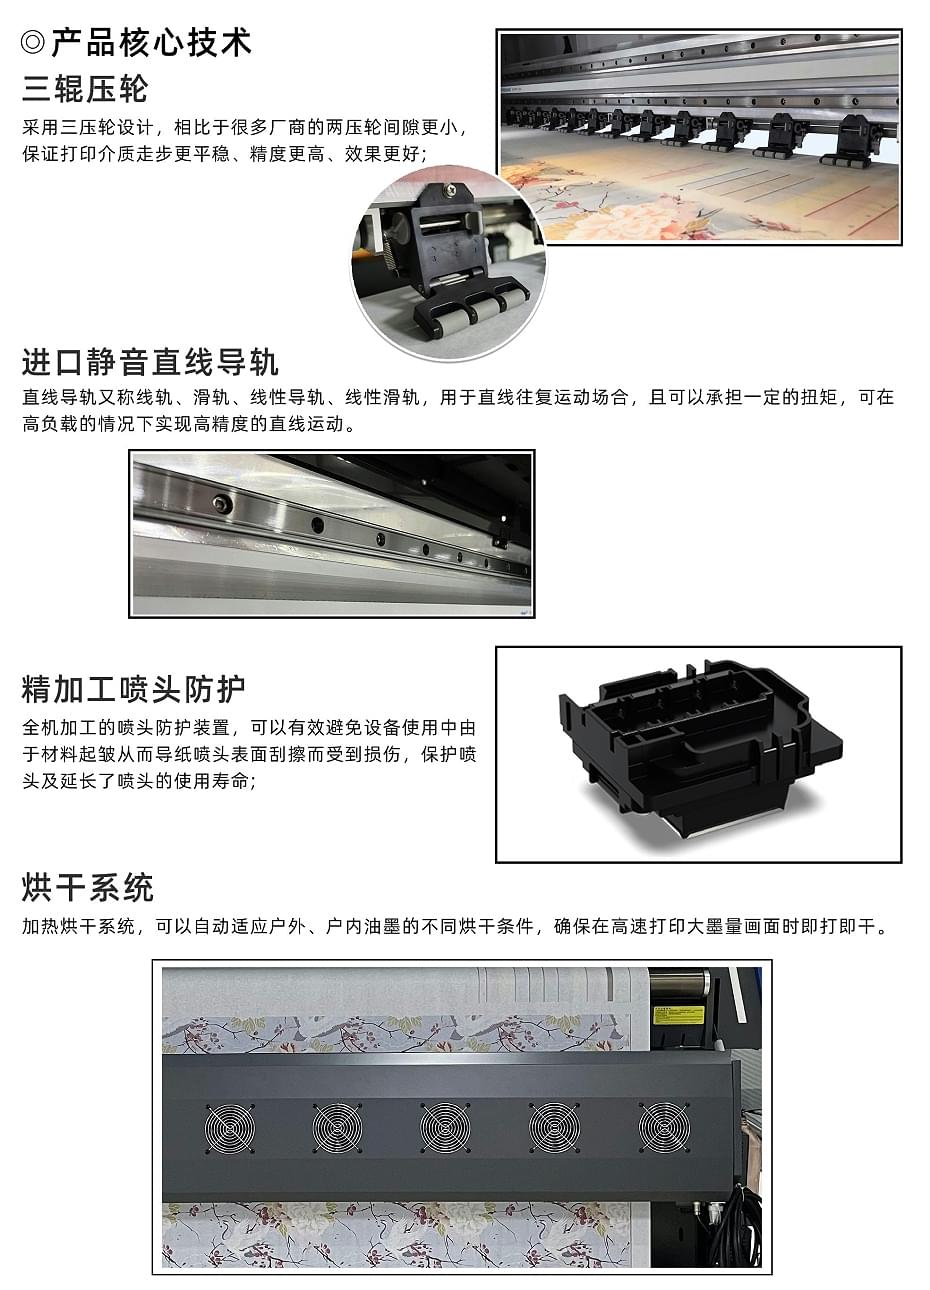 F1904Industrial printing machine_04_Picking